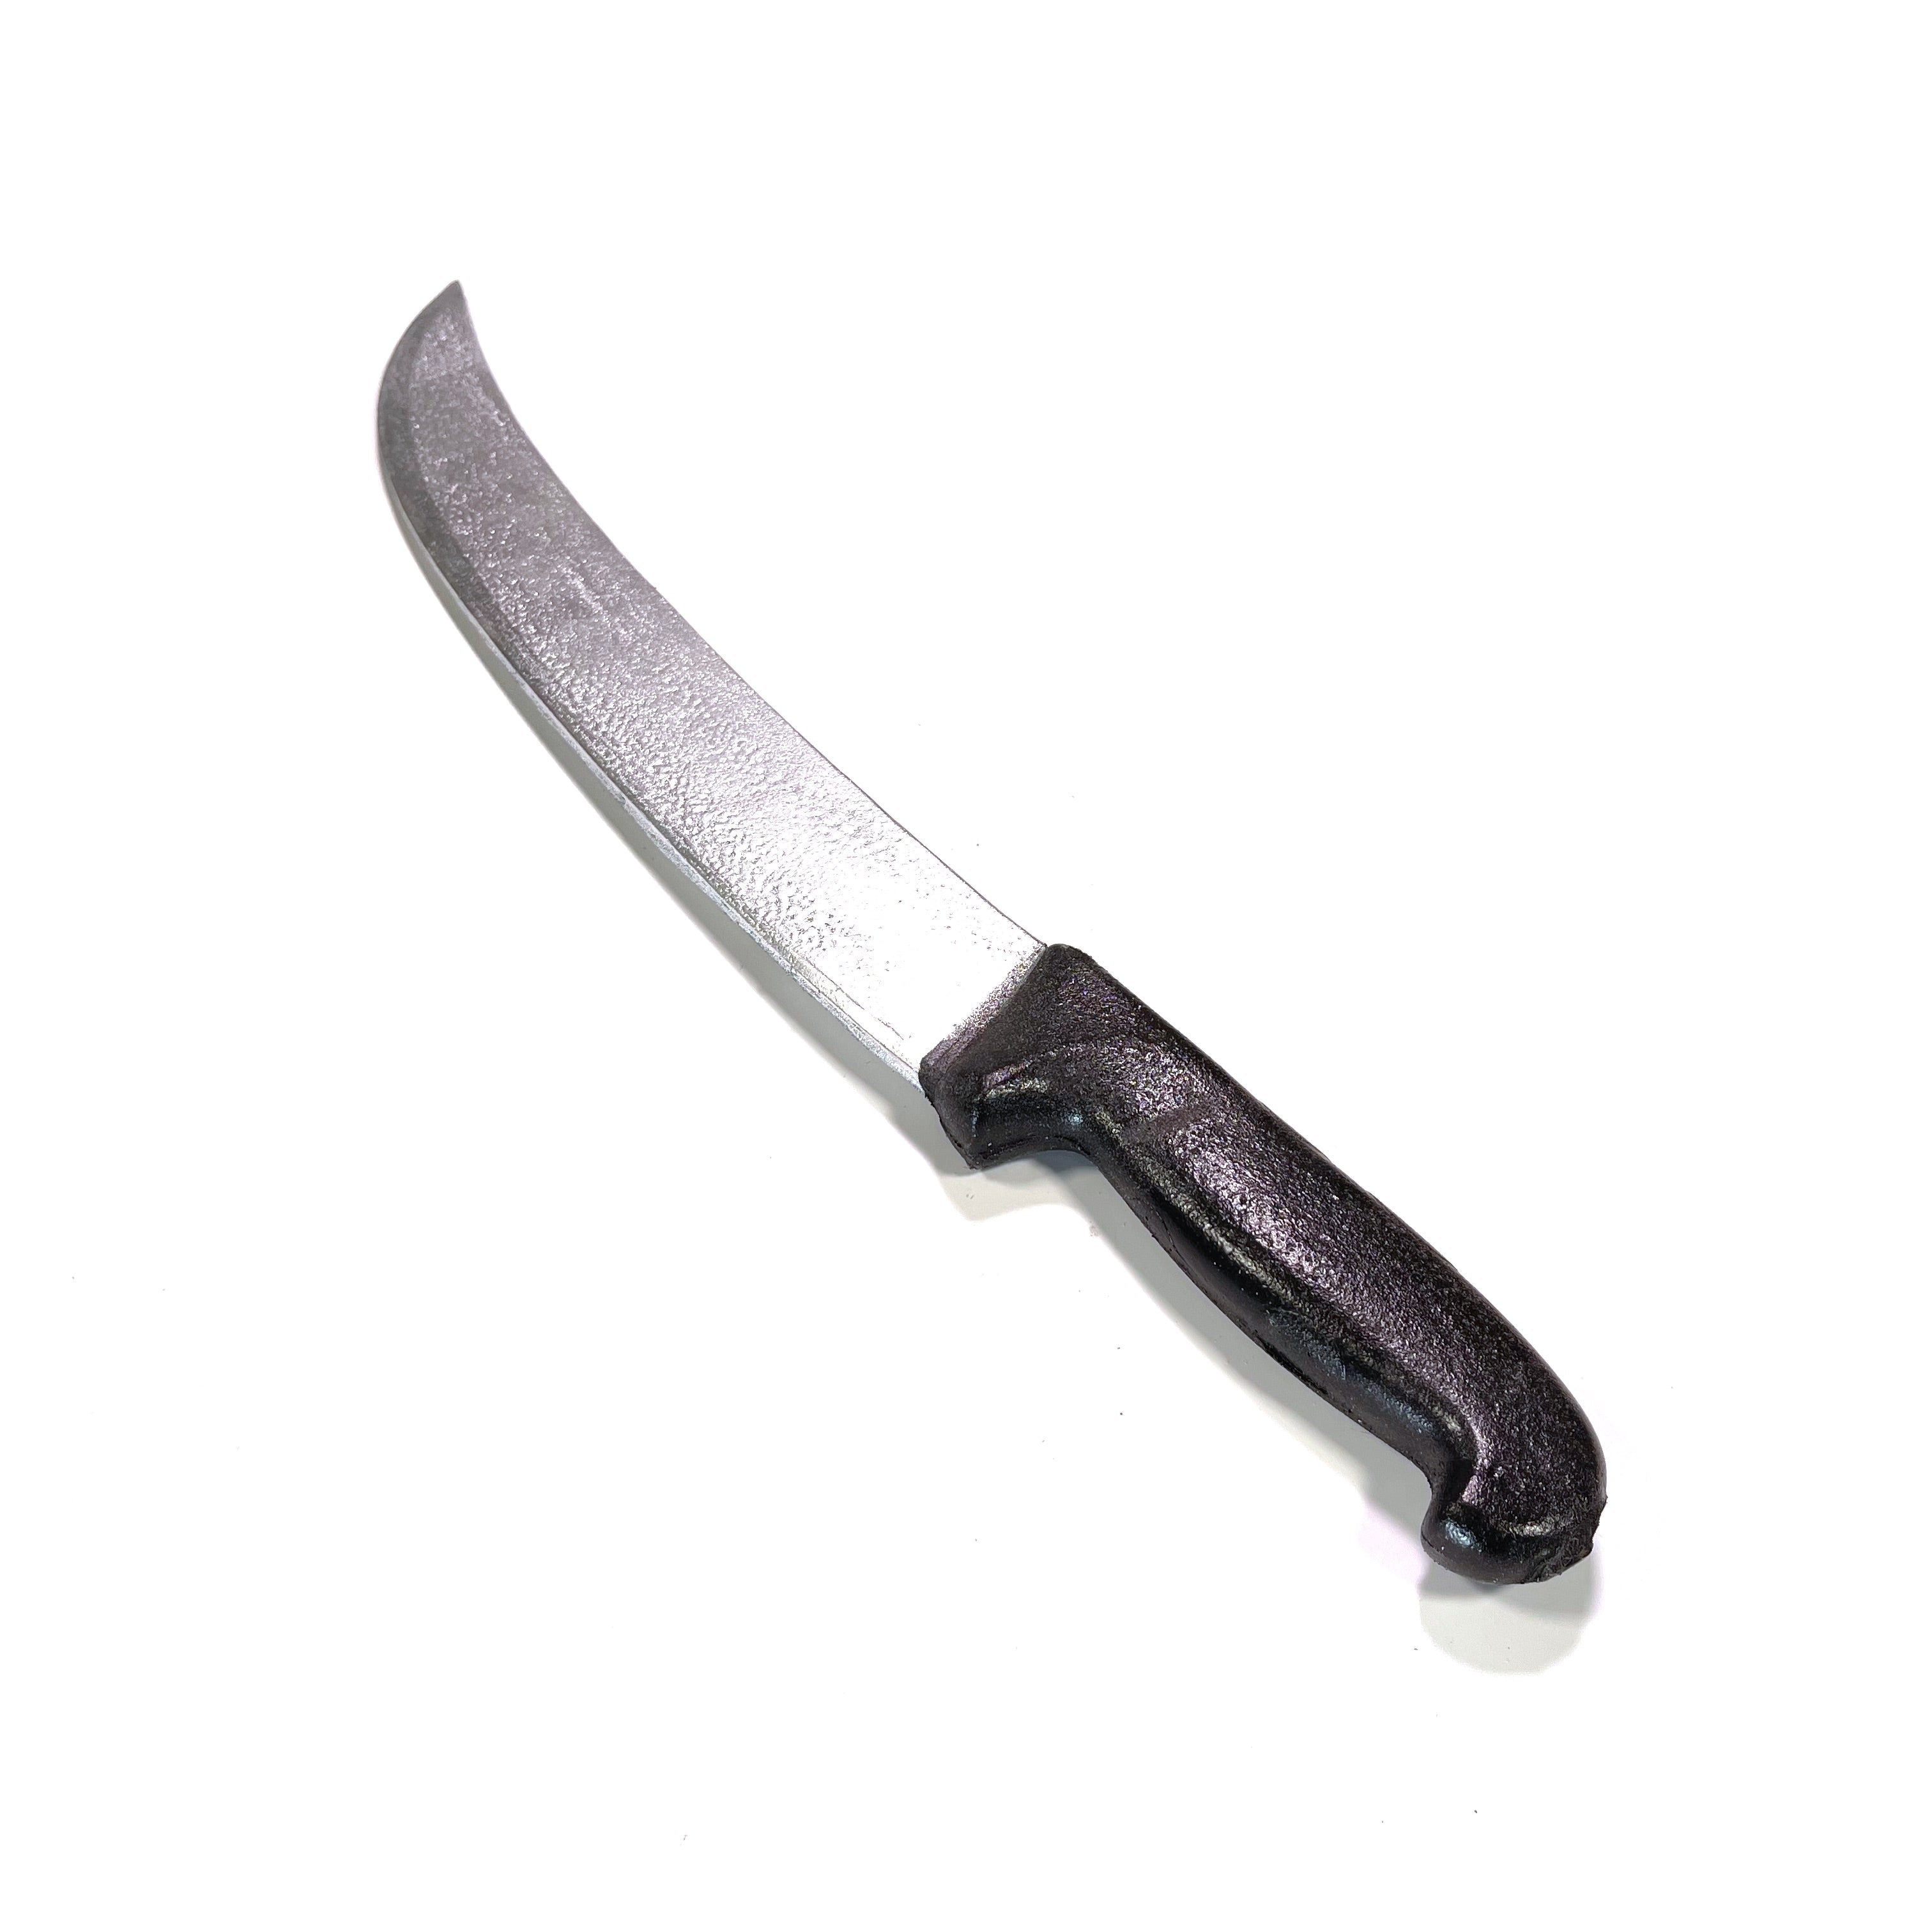 Foam Scimitar Butcher’s Knife Replica - New - NEW